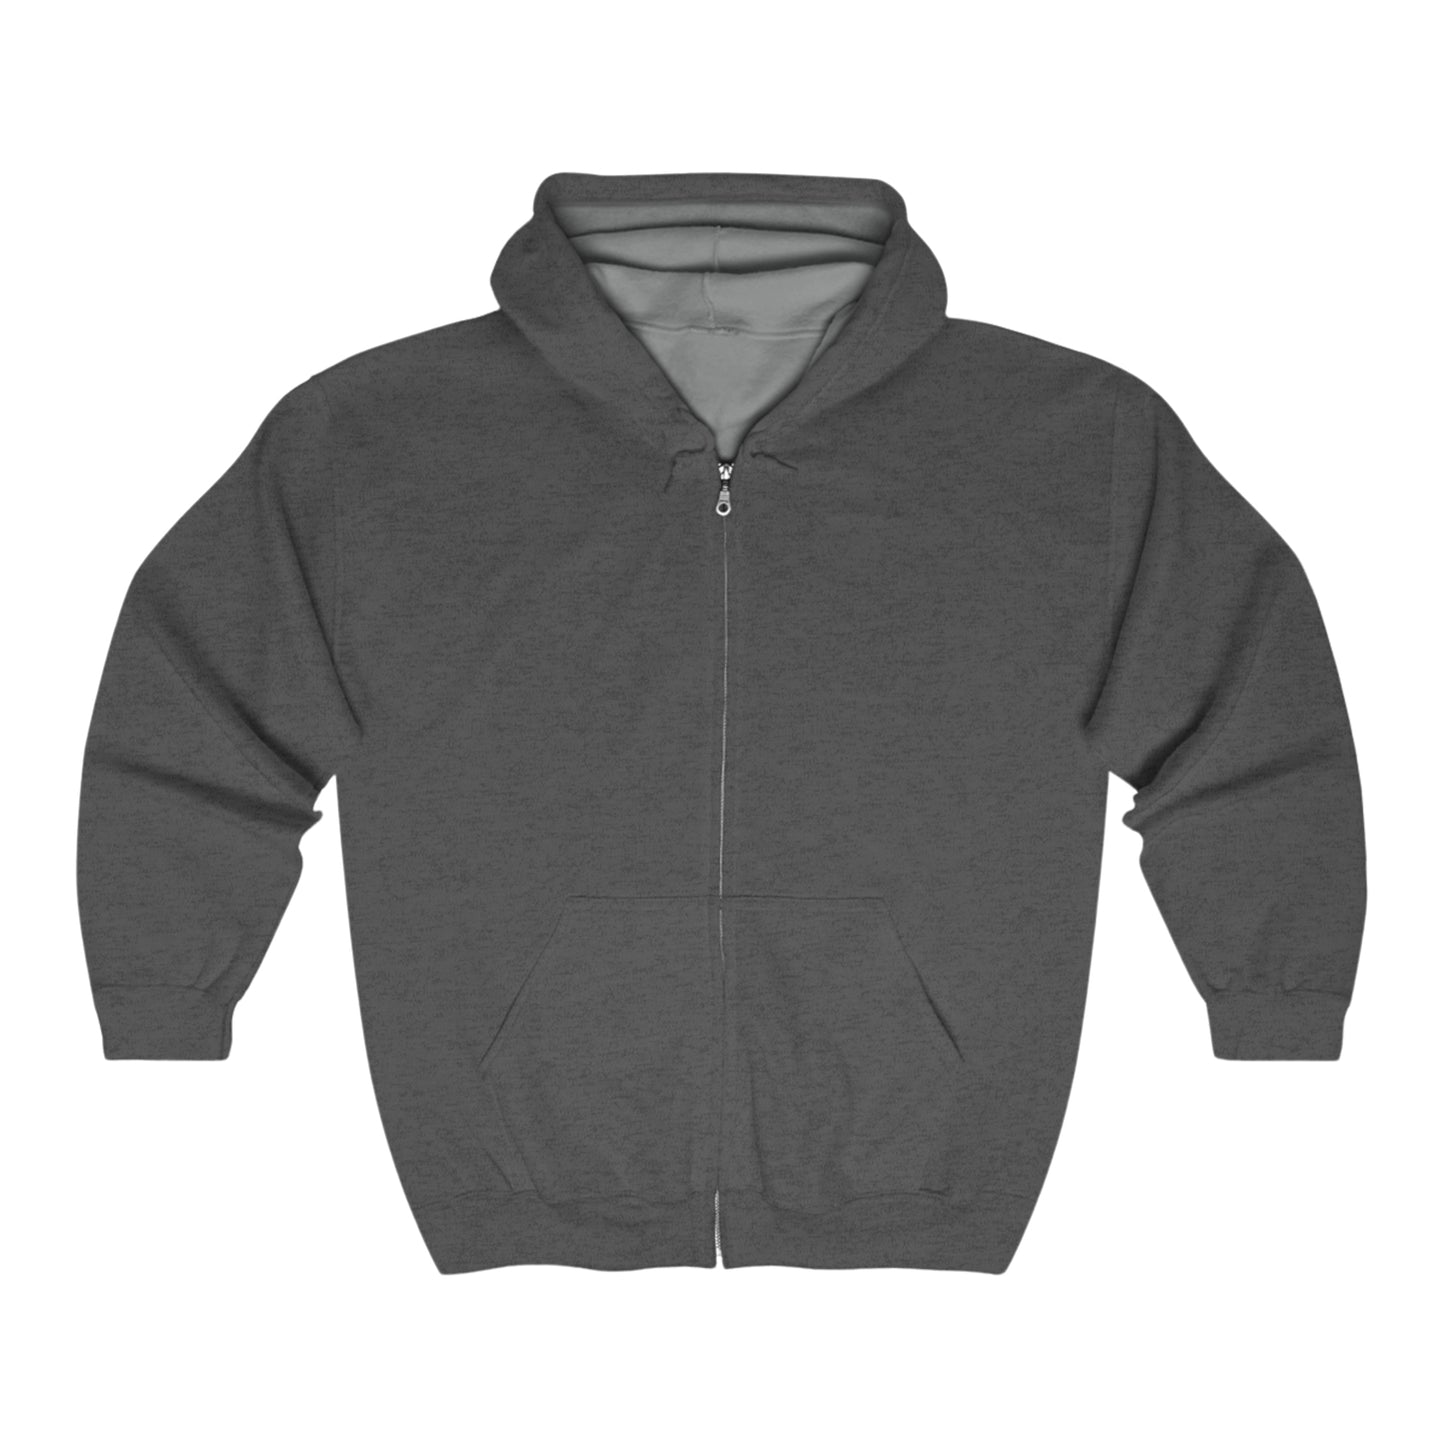 INSPIRED RAISE YOUR STANDARDS Unisex Heavy Blend Full Zip Hooded Sweatshirt